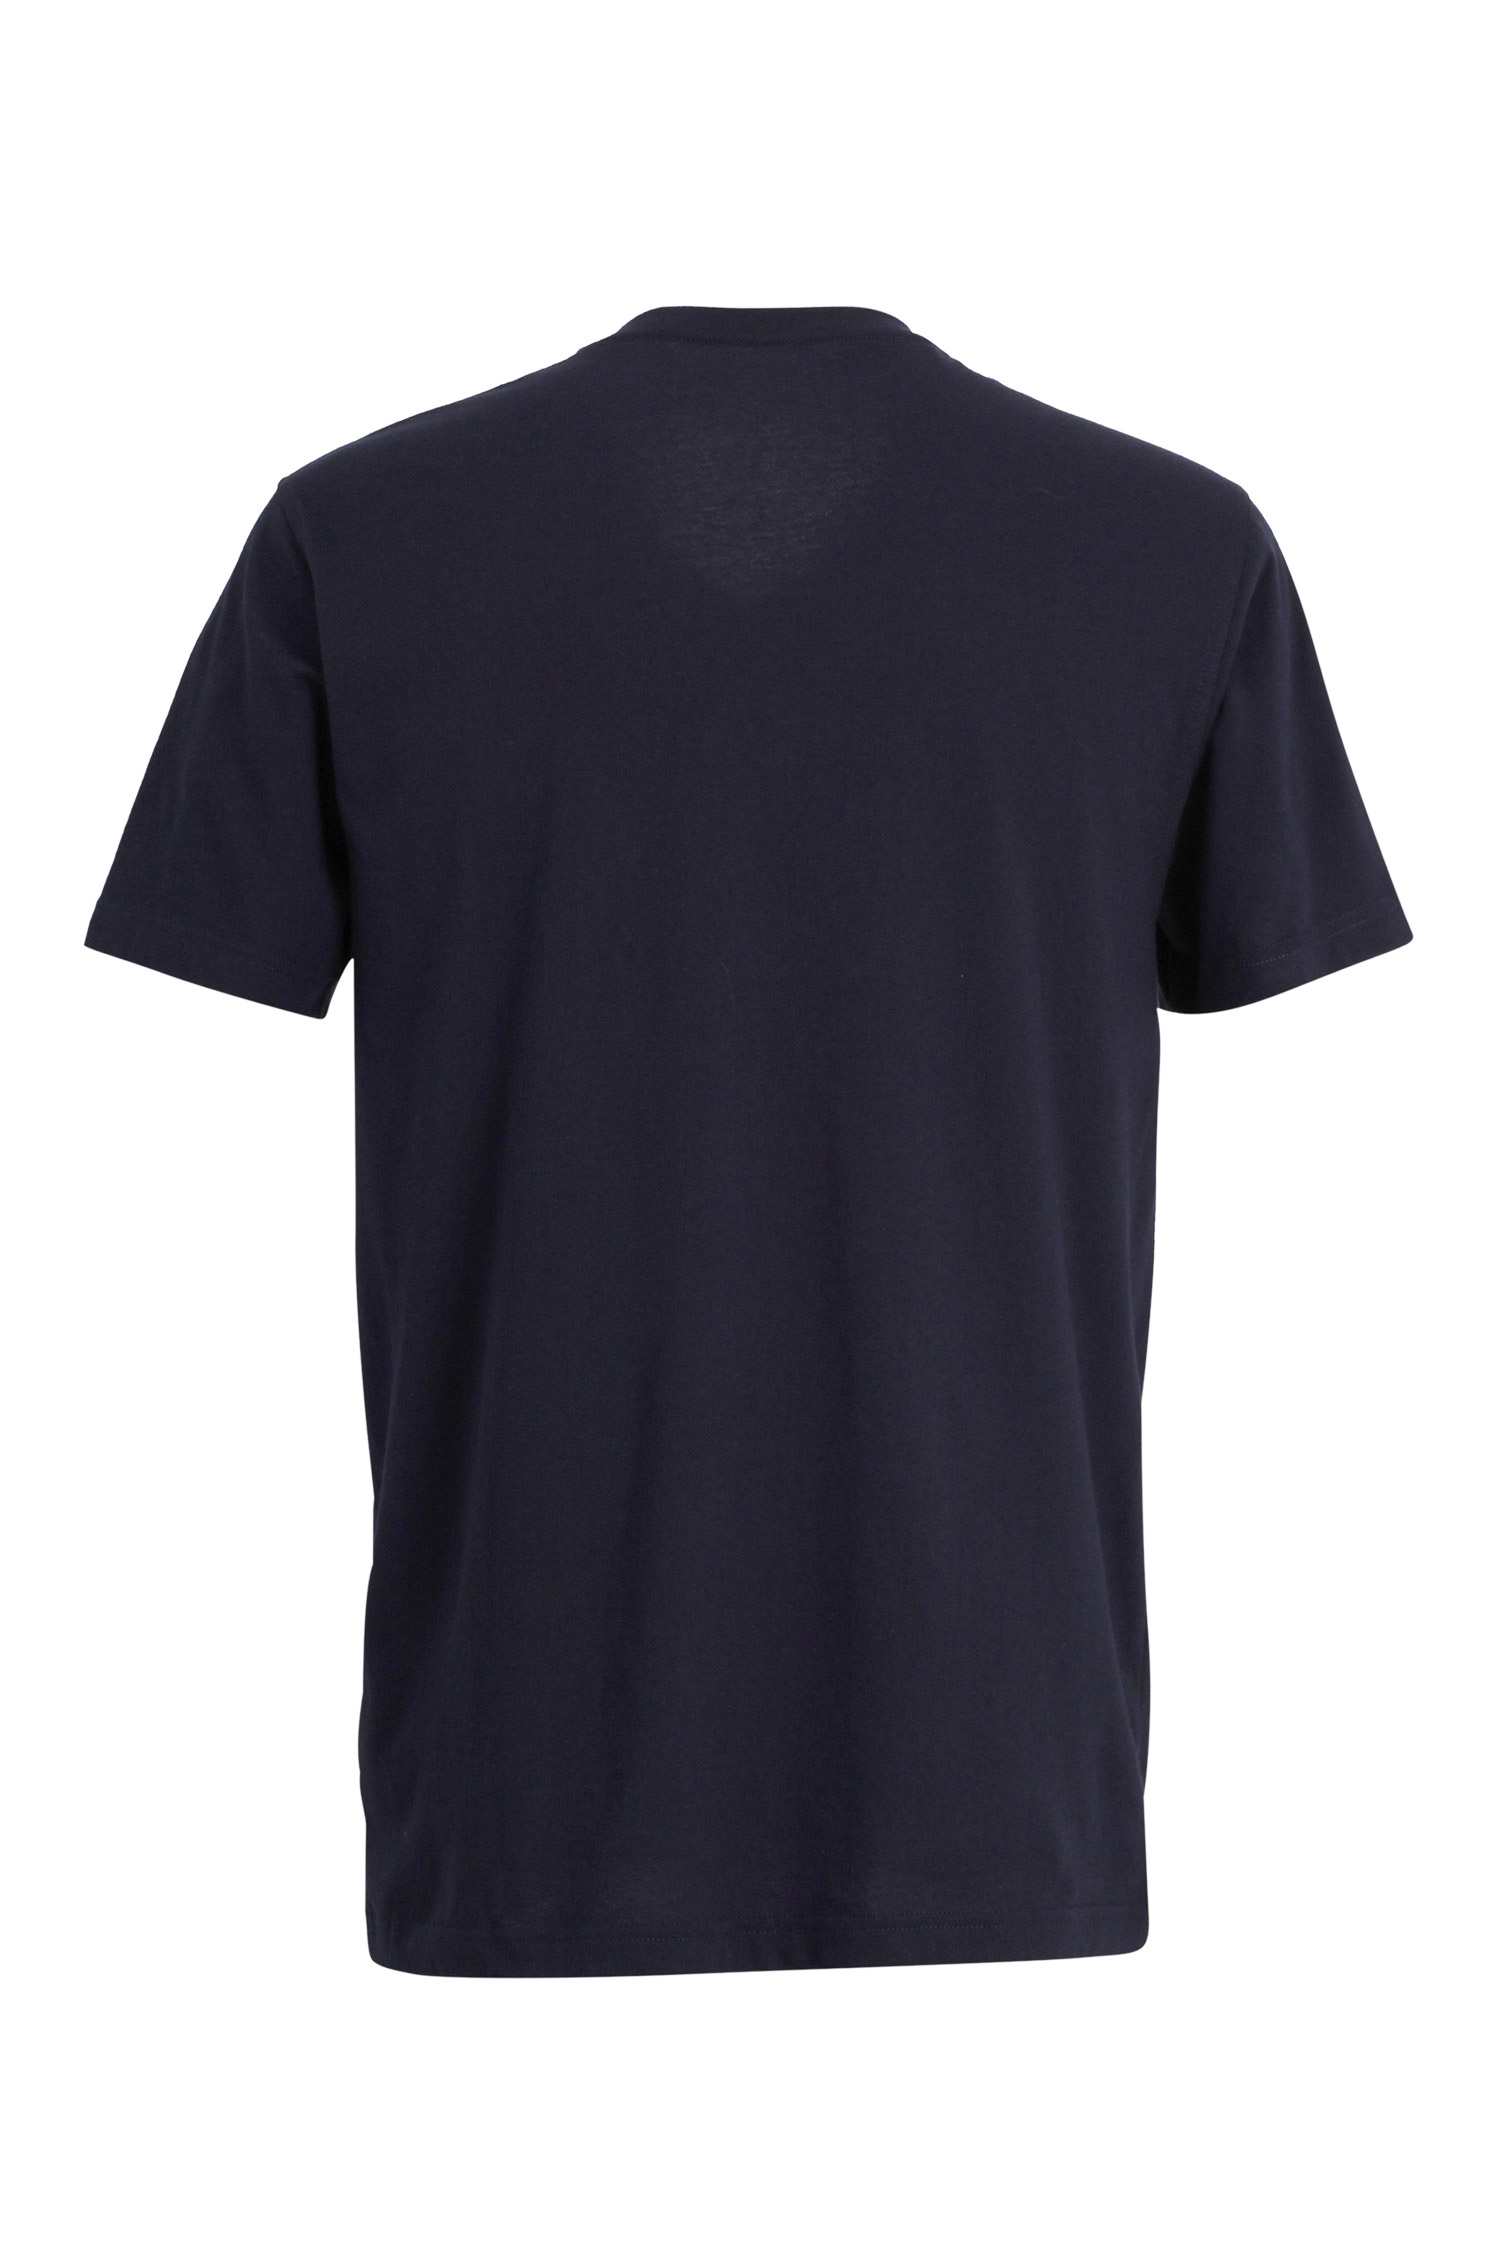 Homewear, Camisetas, 110834, AZUL OSCURO | Zoom